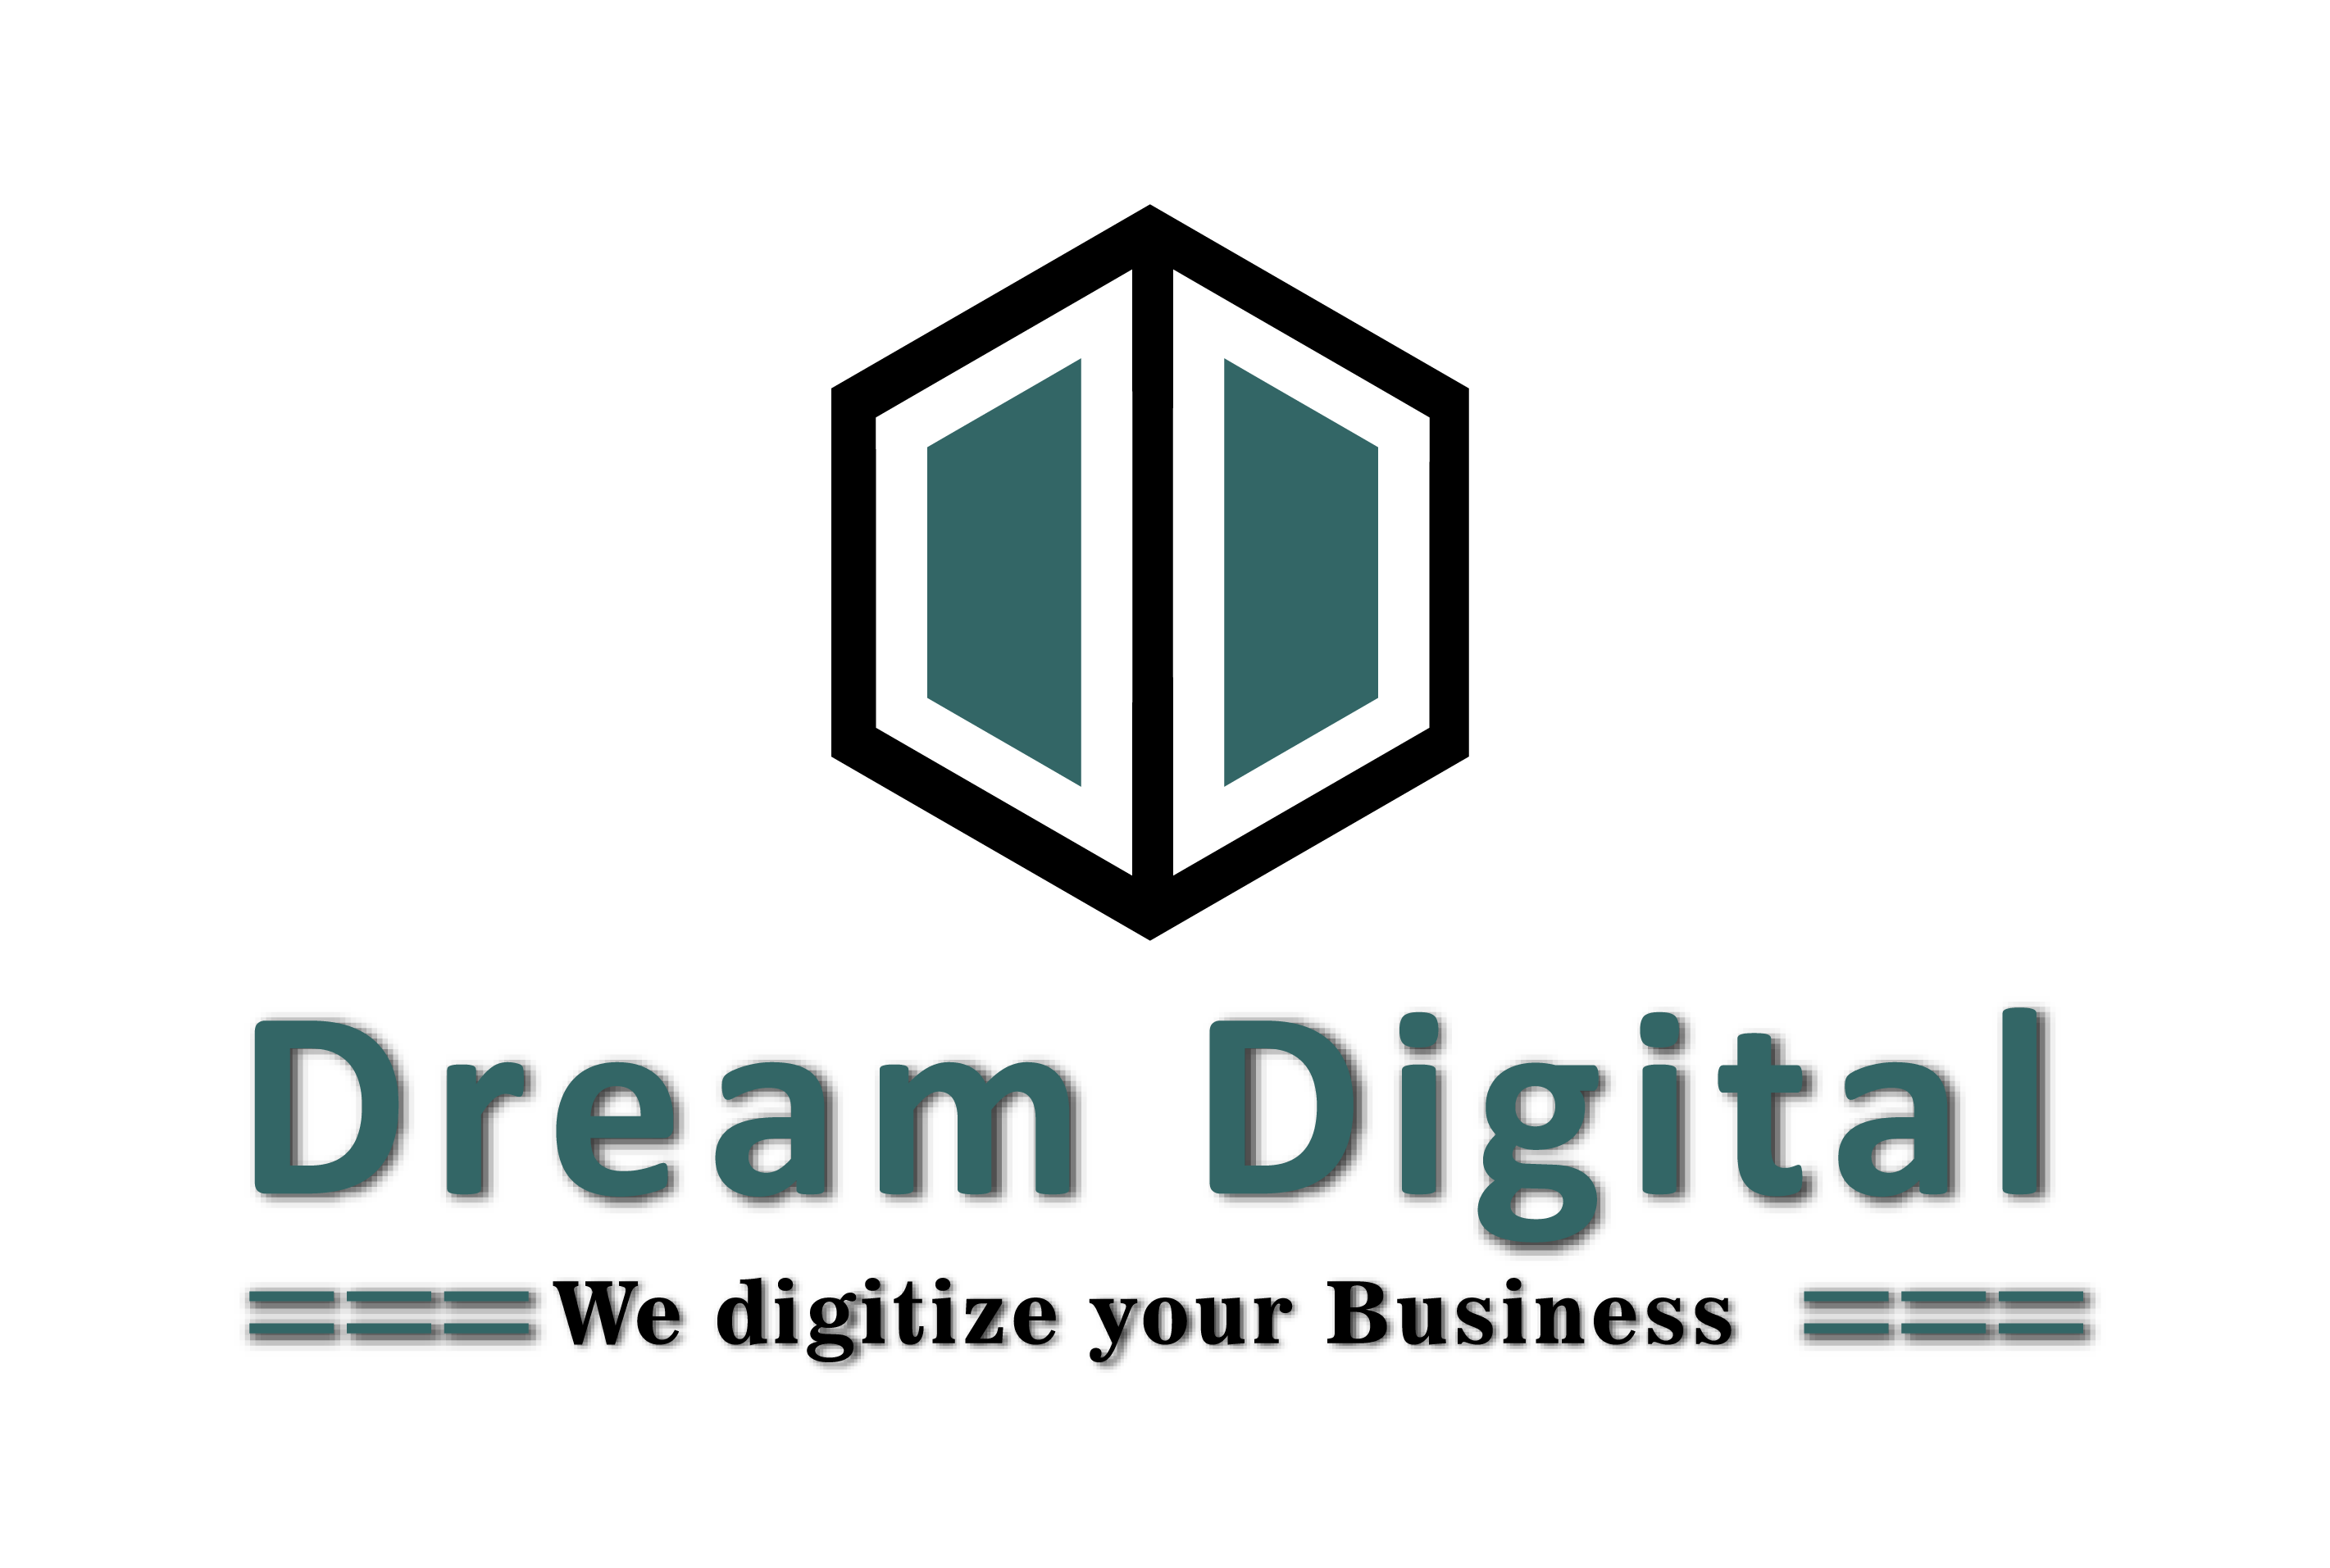 DREAM DIGITAL from KE of Telecommunication